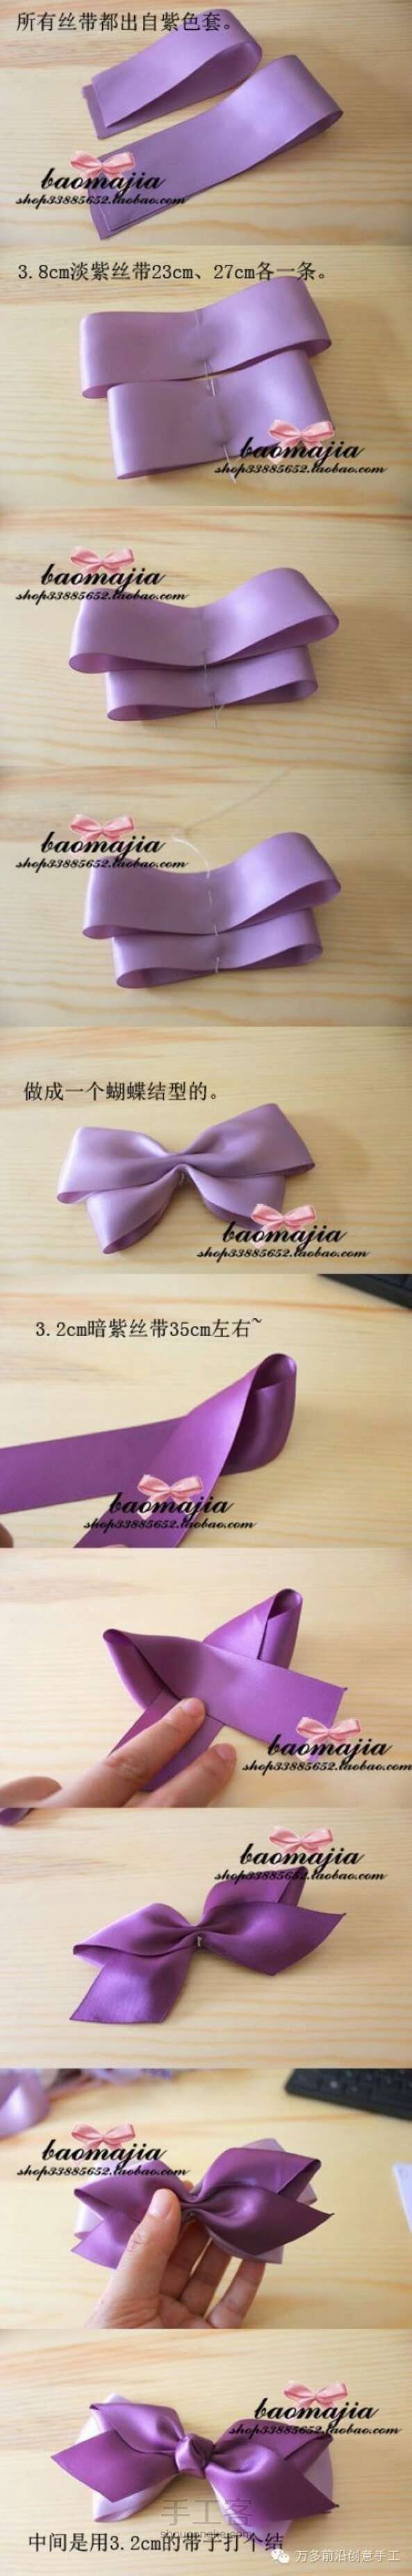 DIY紫色小饰品教程 第6步